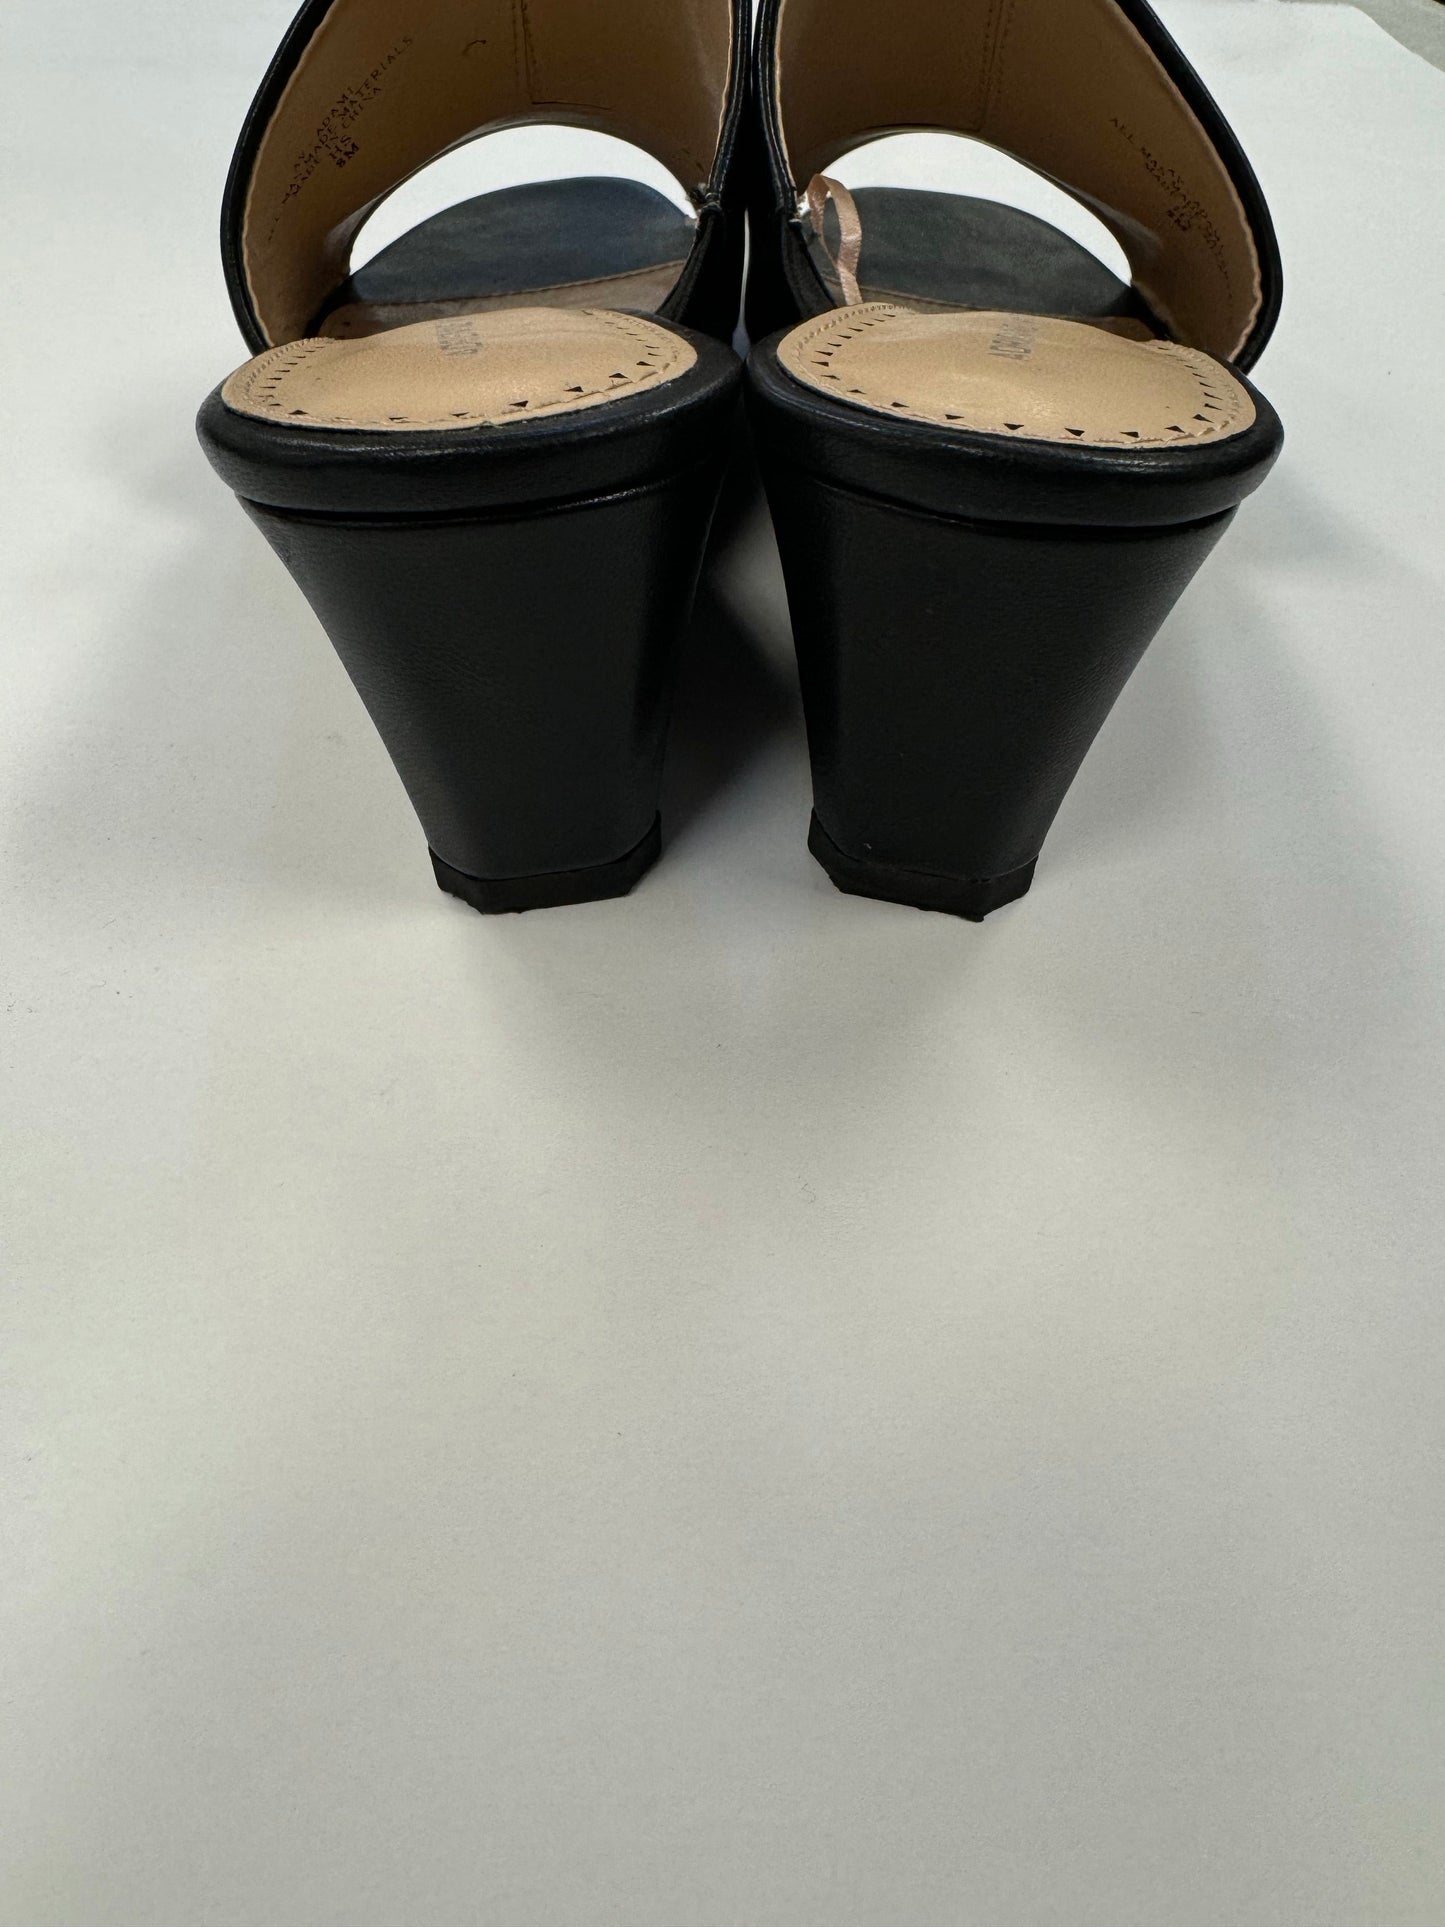 Black Sandals Heels Wedge Adrienne Vittadini, Size 8